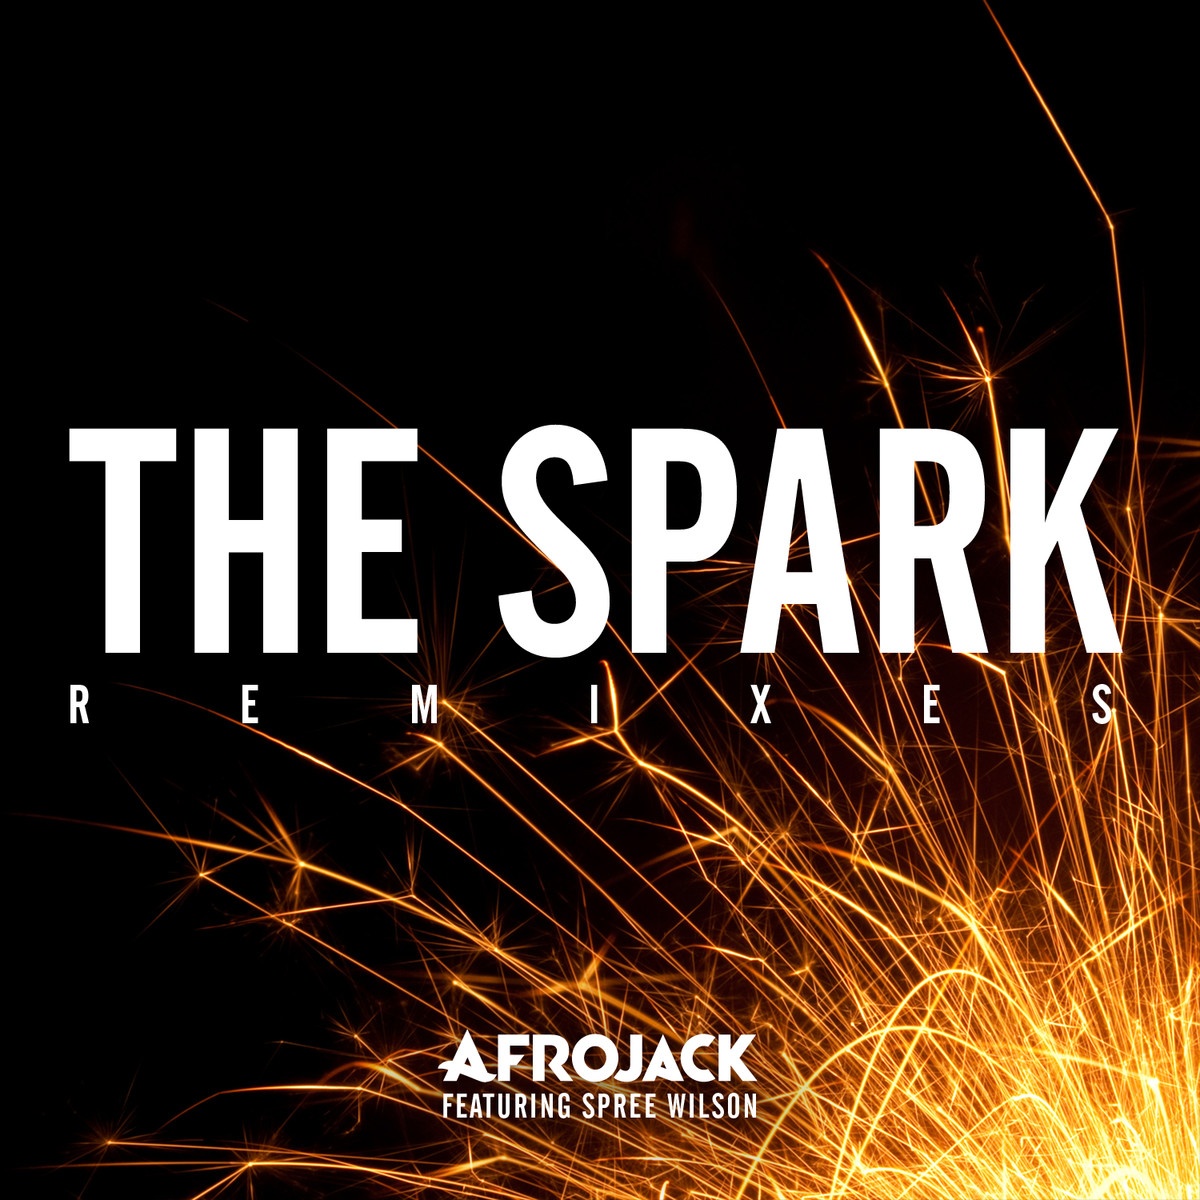 The Spark (Tetsuya Komuro Remix)